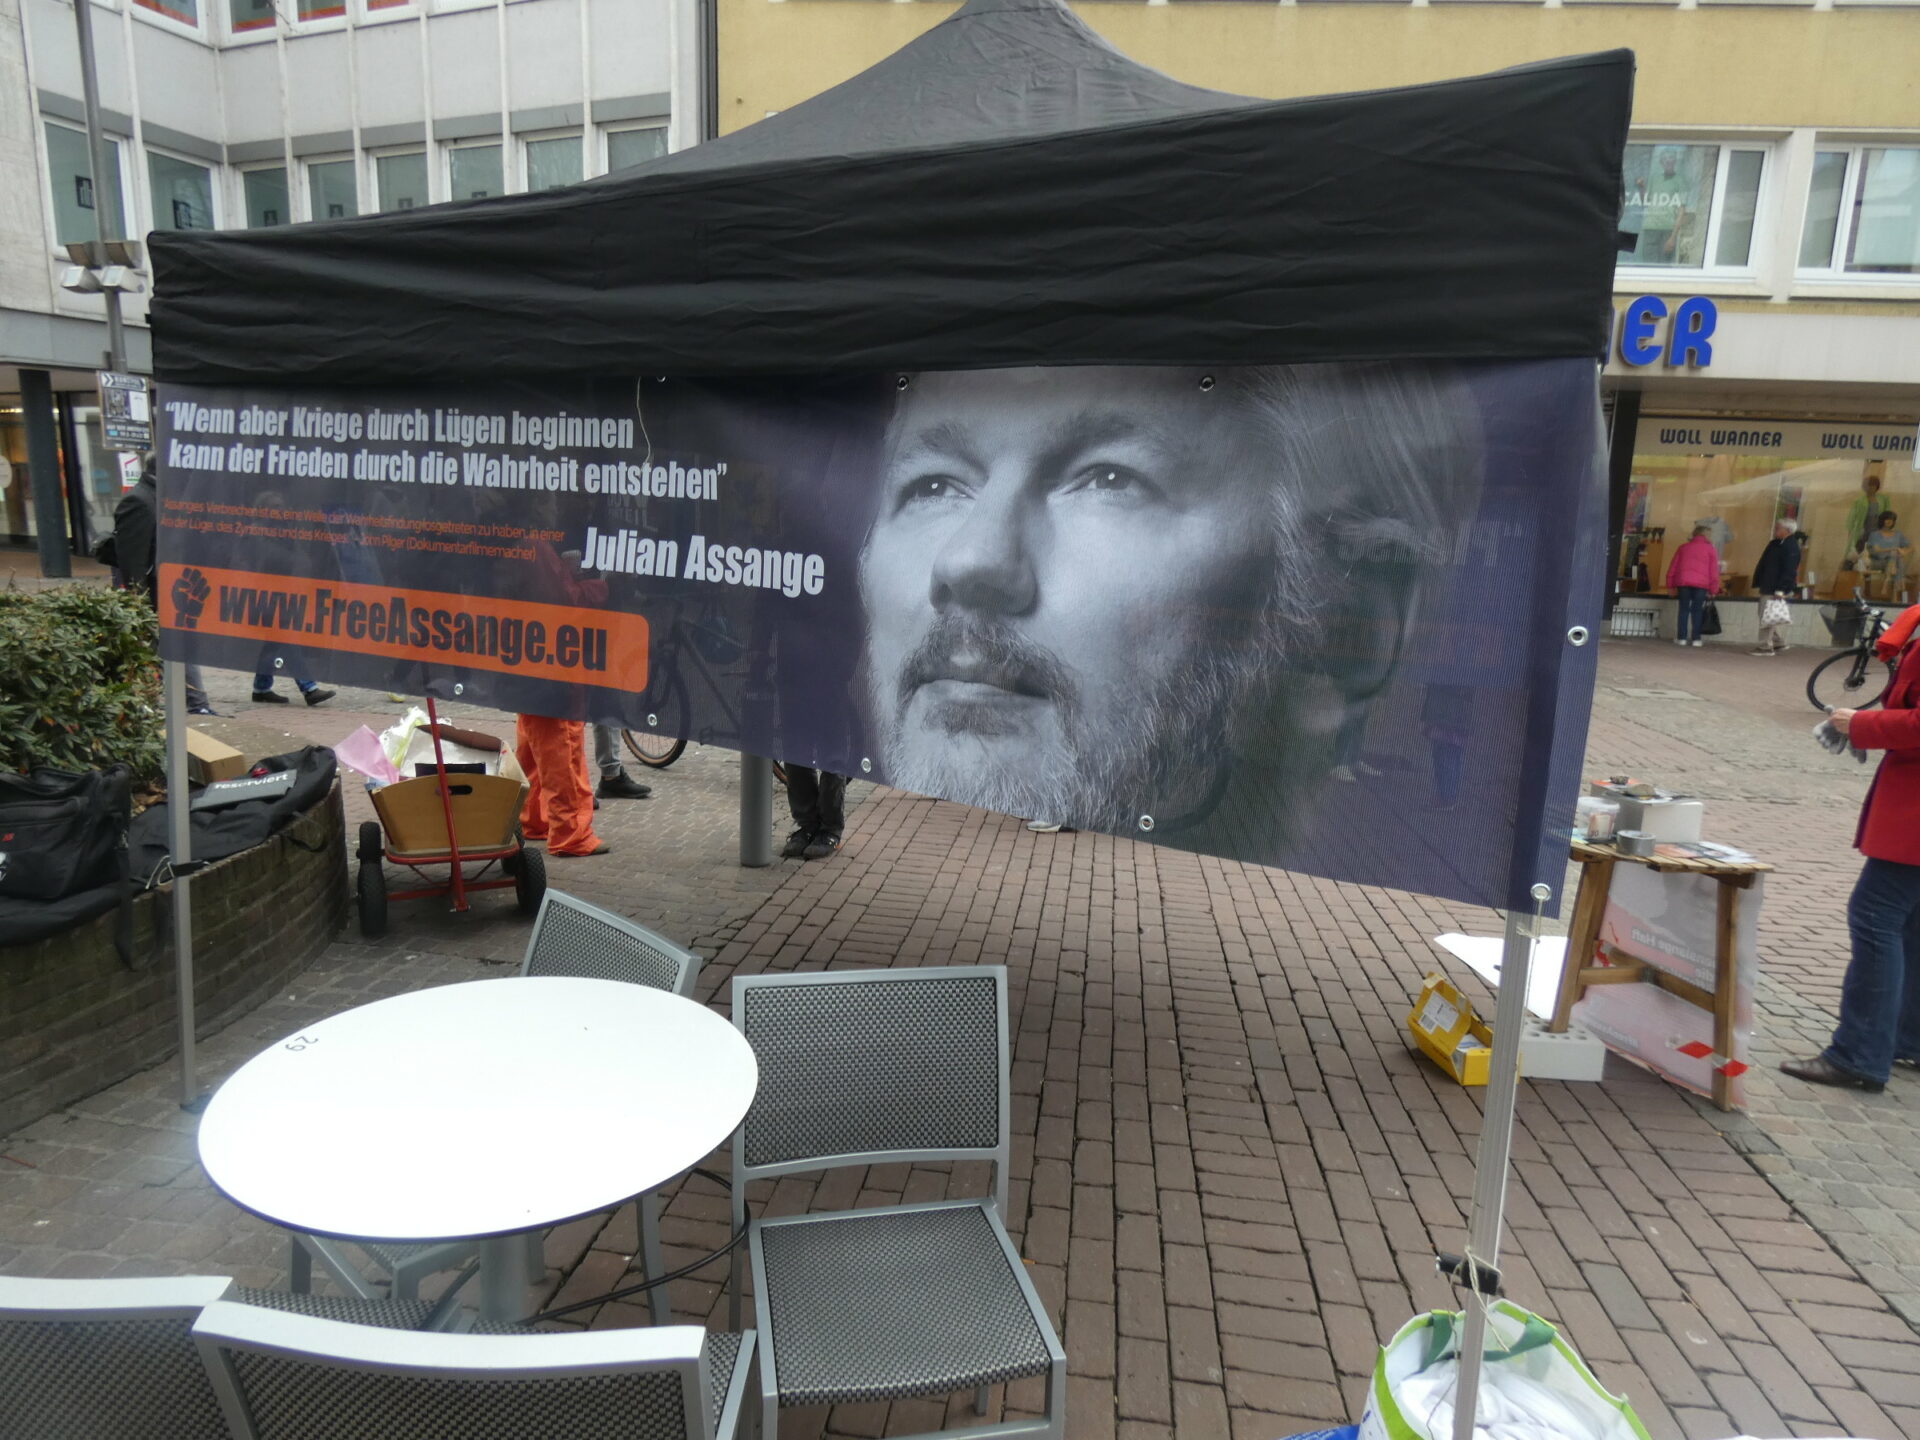 Free Assange: don't imprison the messenger